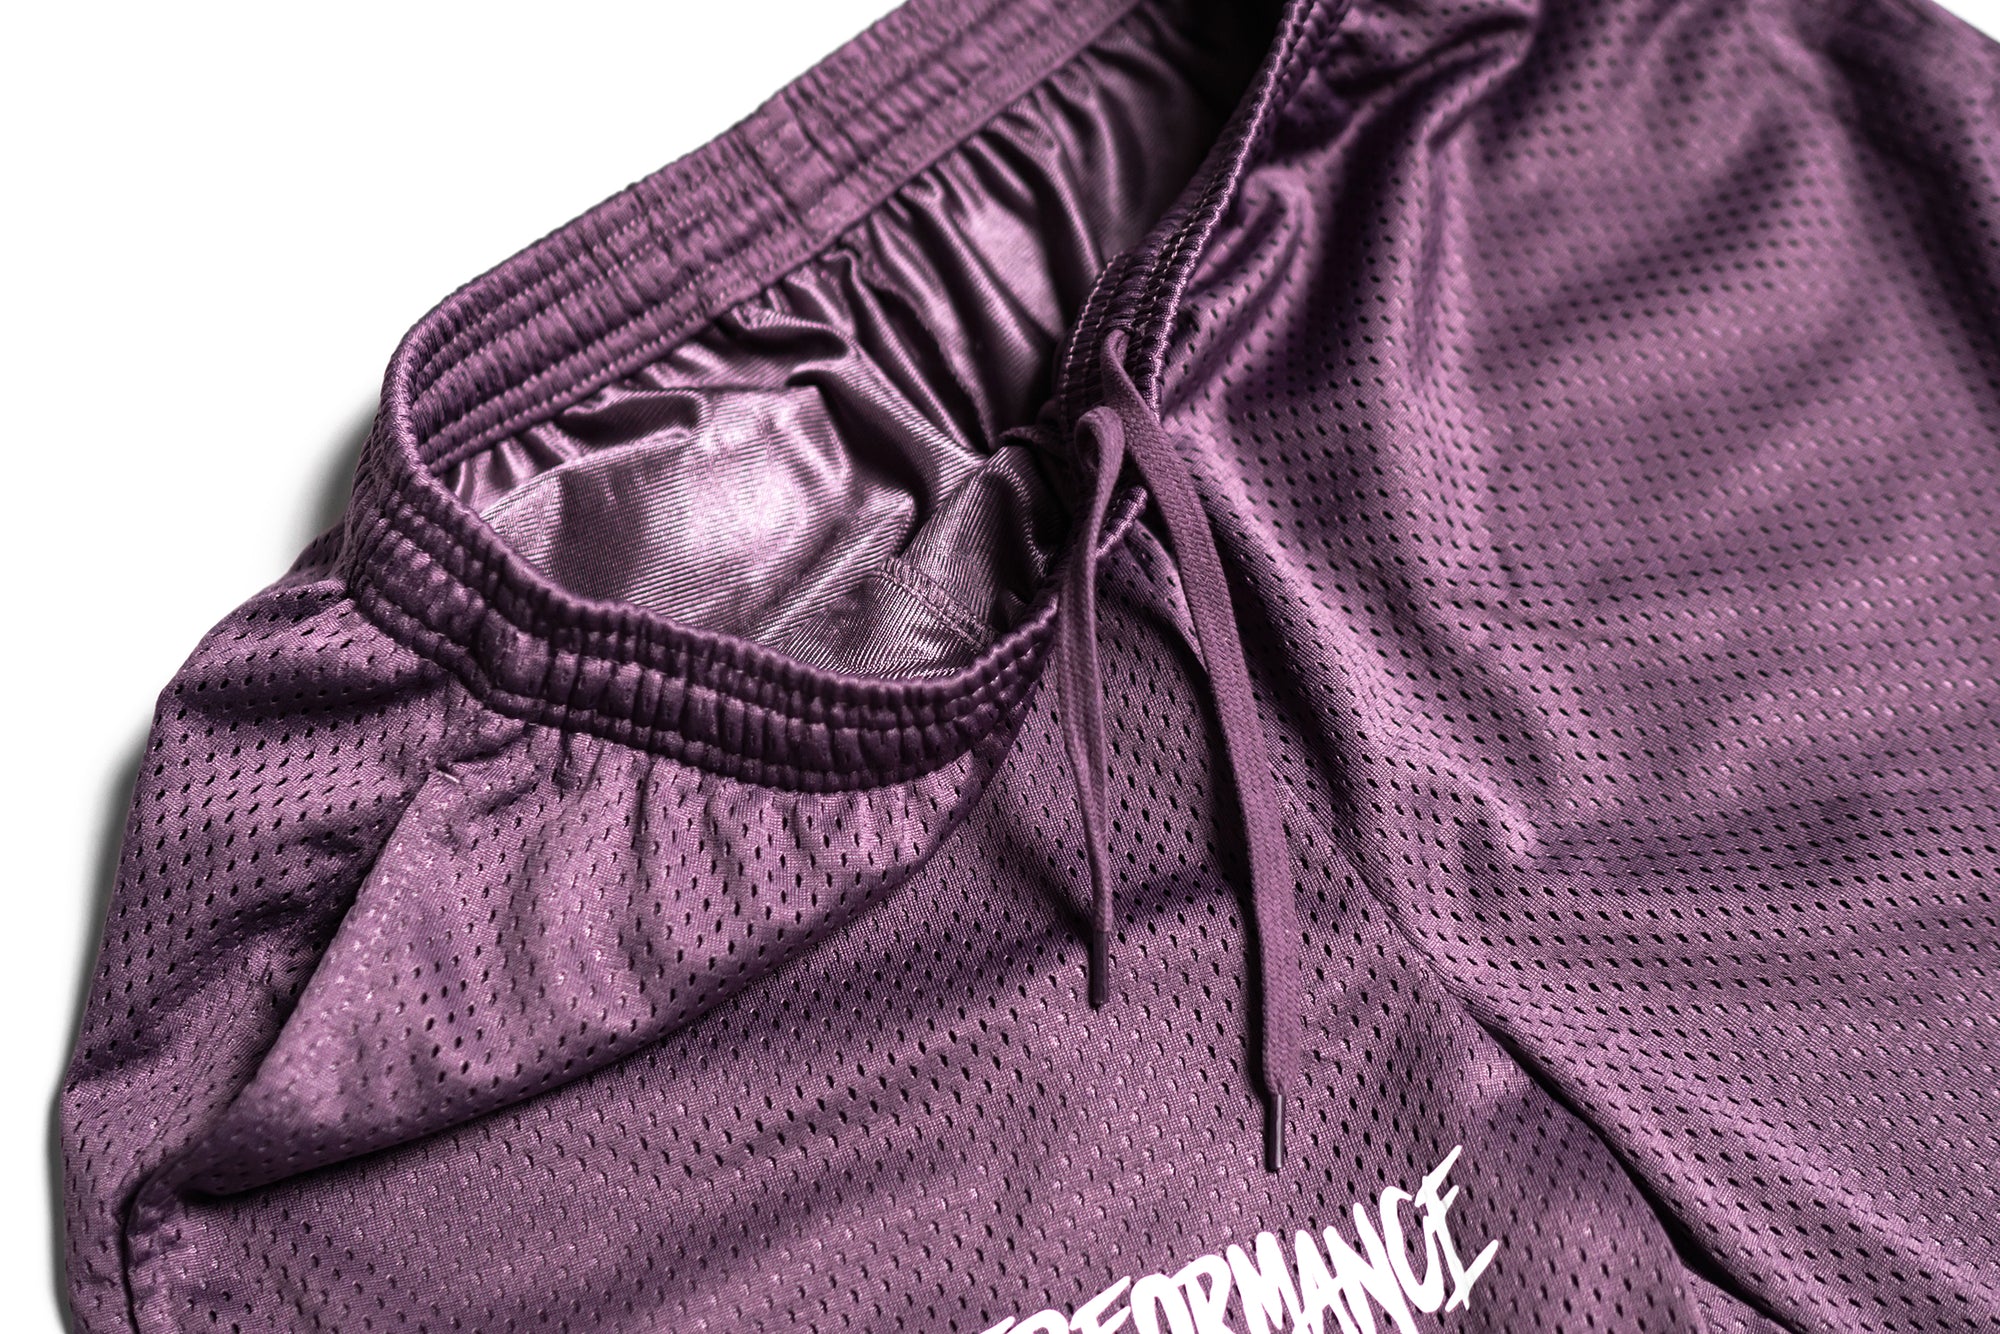 mesh shorts purple